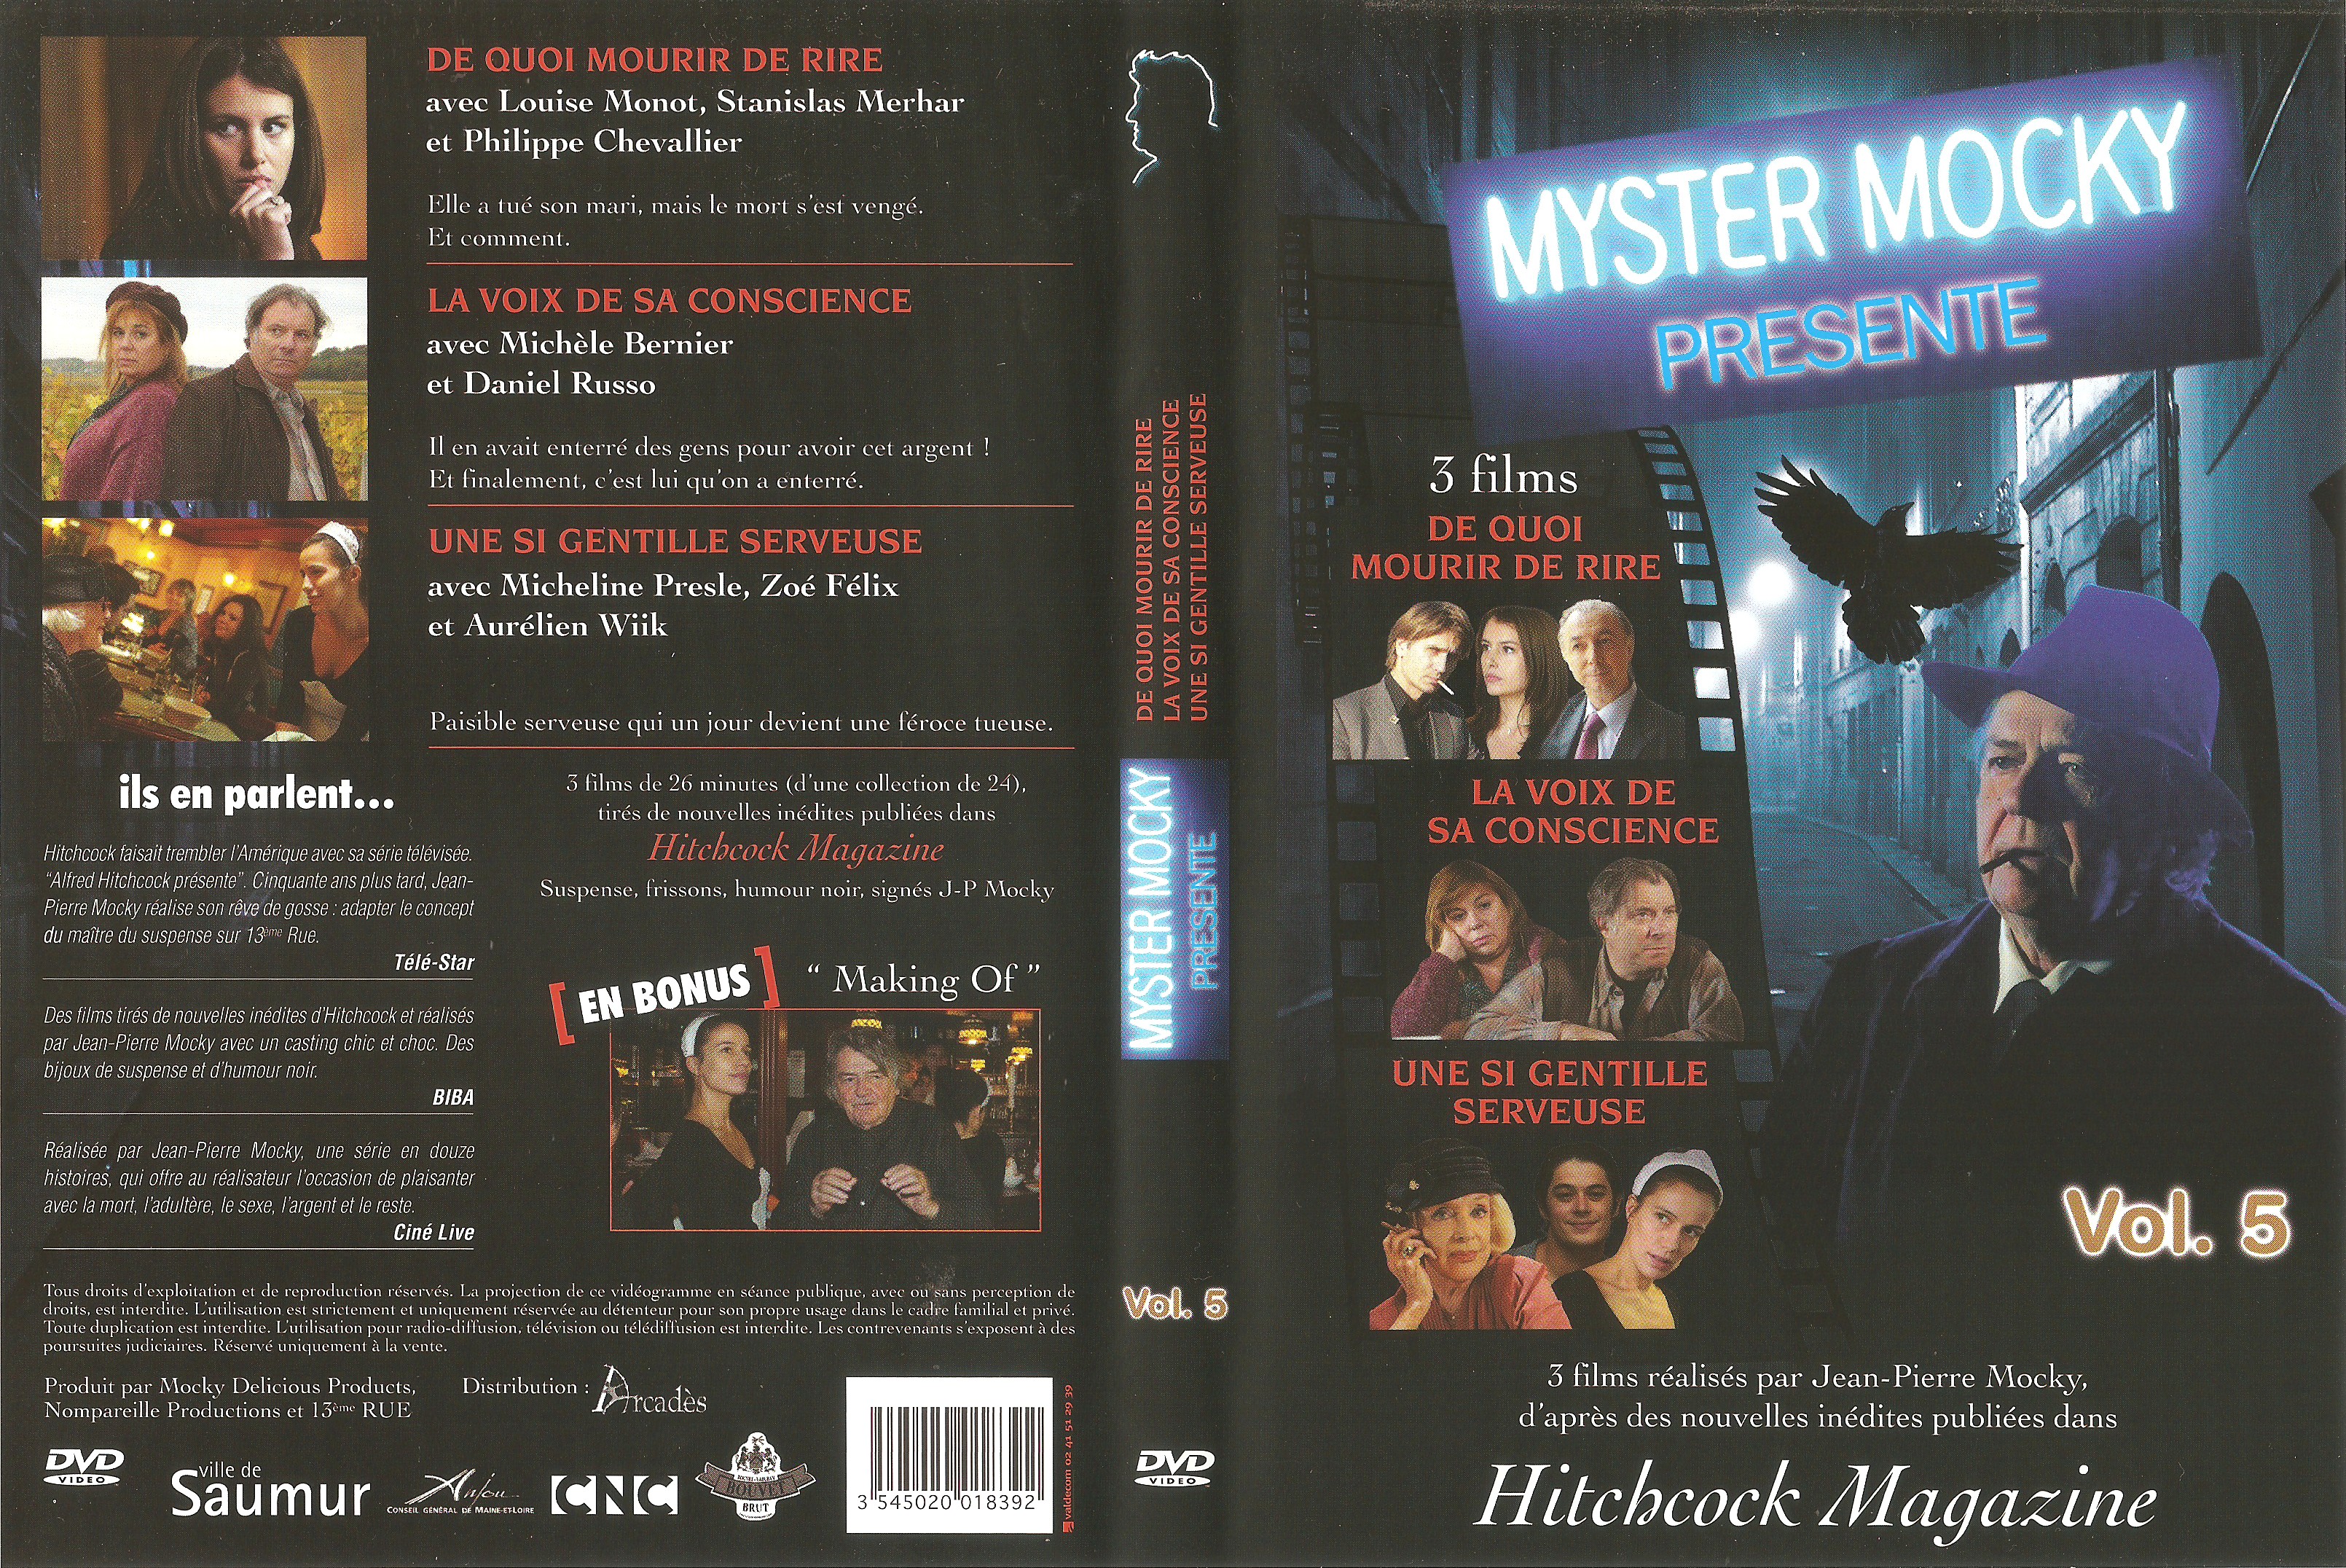 Jaquette DVD Myster Mocky prsente Vol 05